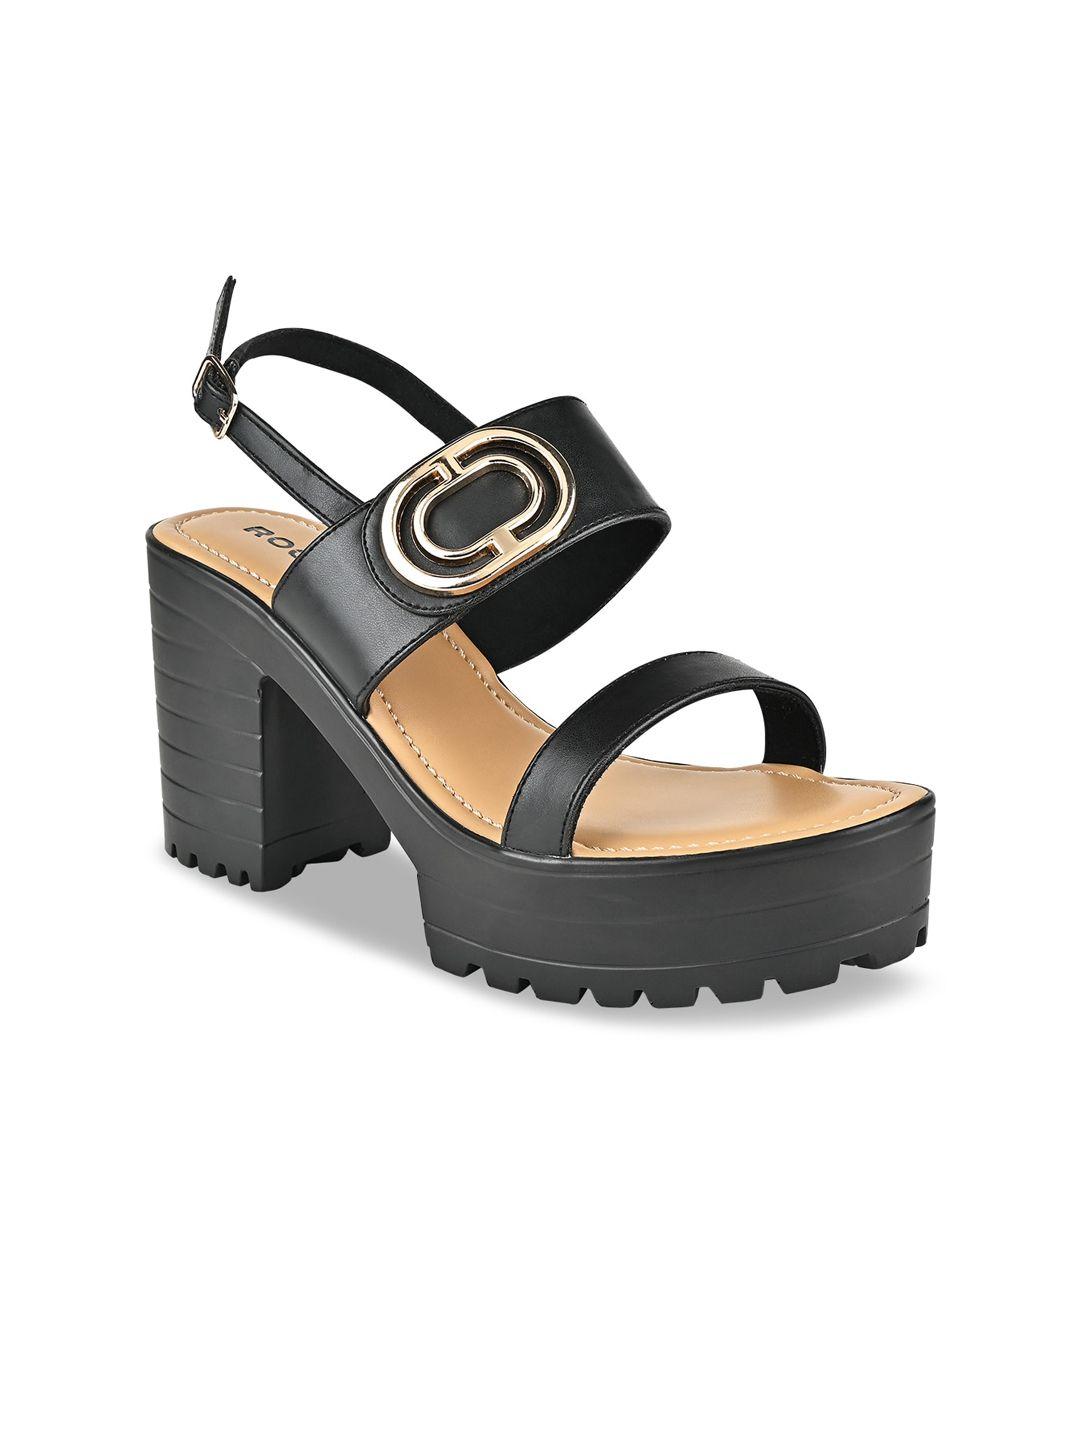 rocia-embellished-open-toe-platform-heels-with-buckles